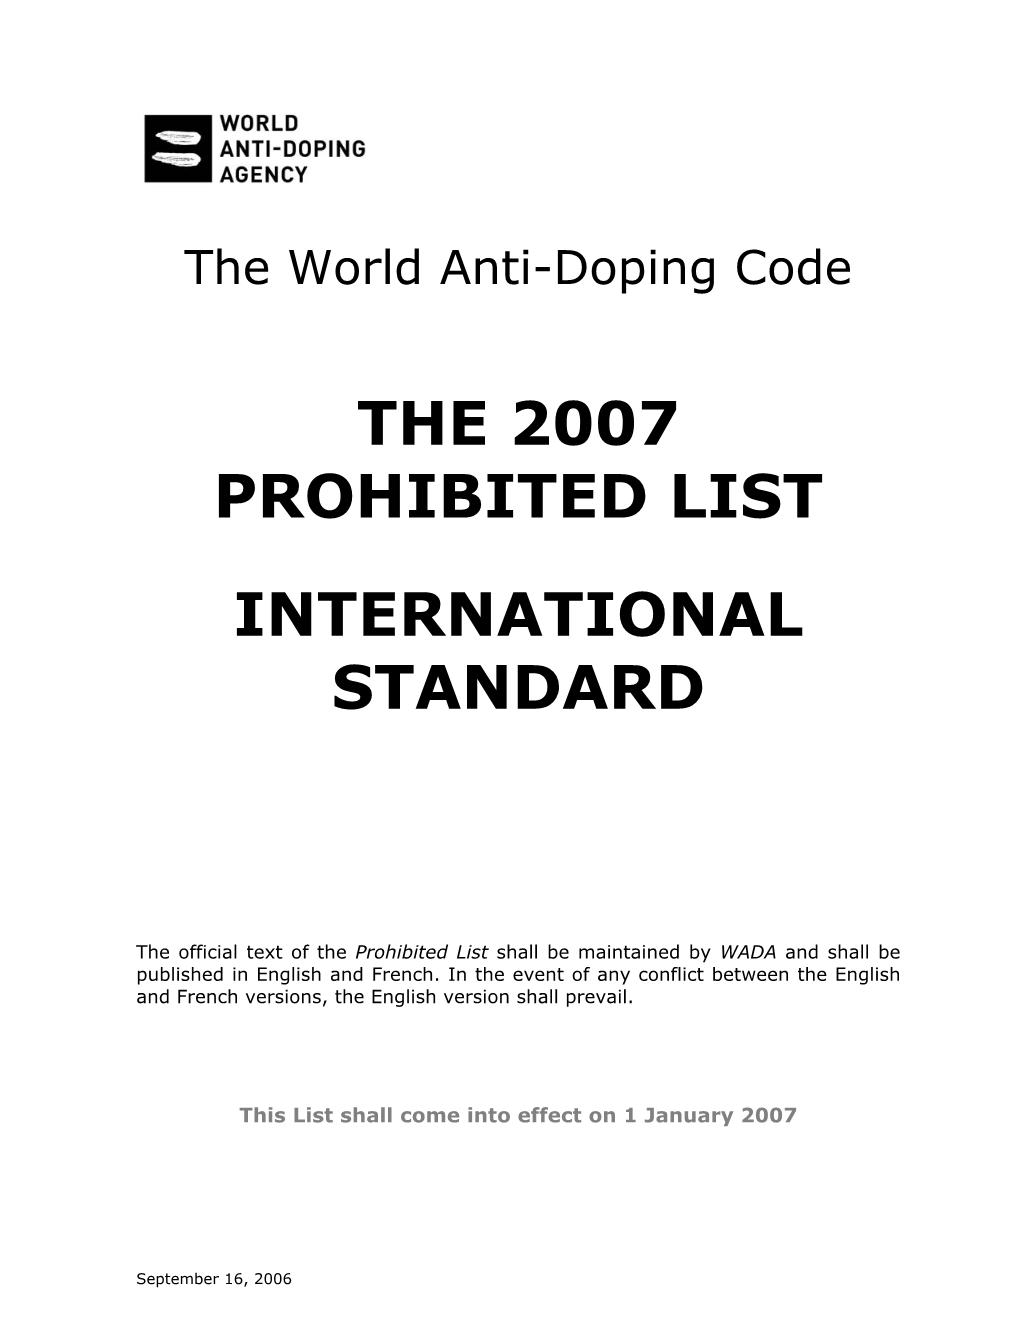 The 2007 Prohibited List International Standard